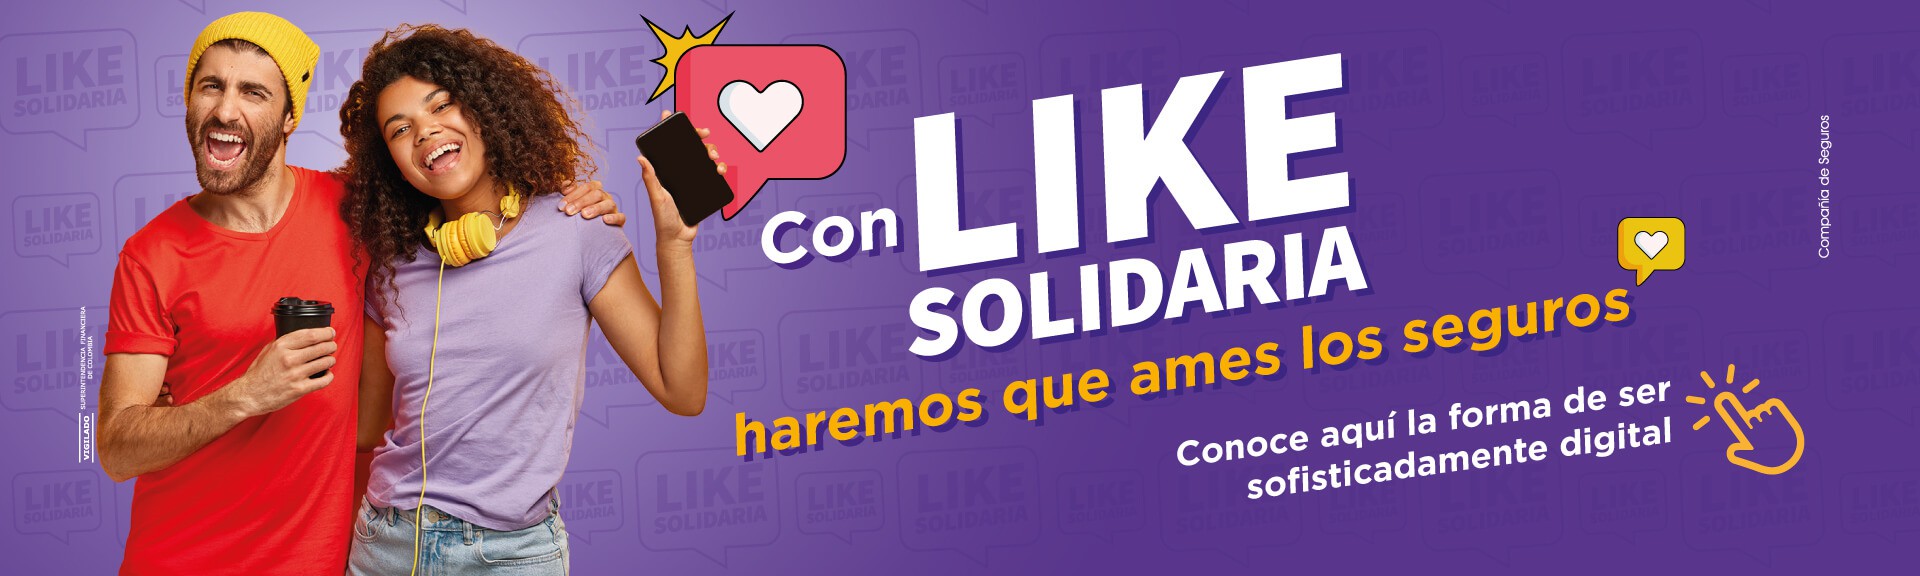 Seguros Digitales - Like Solidaria